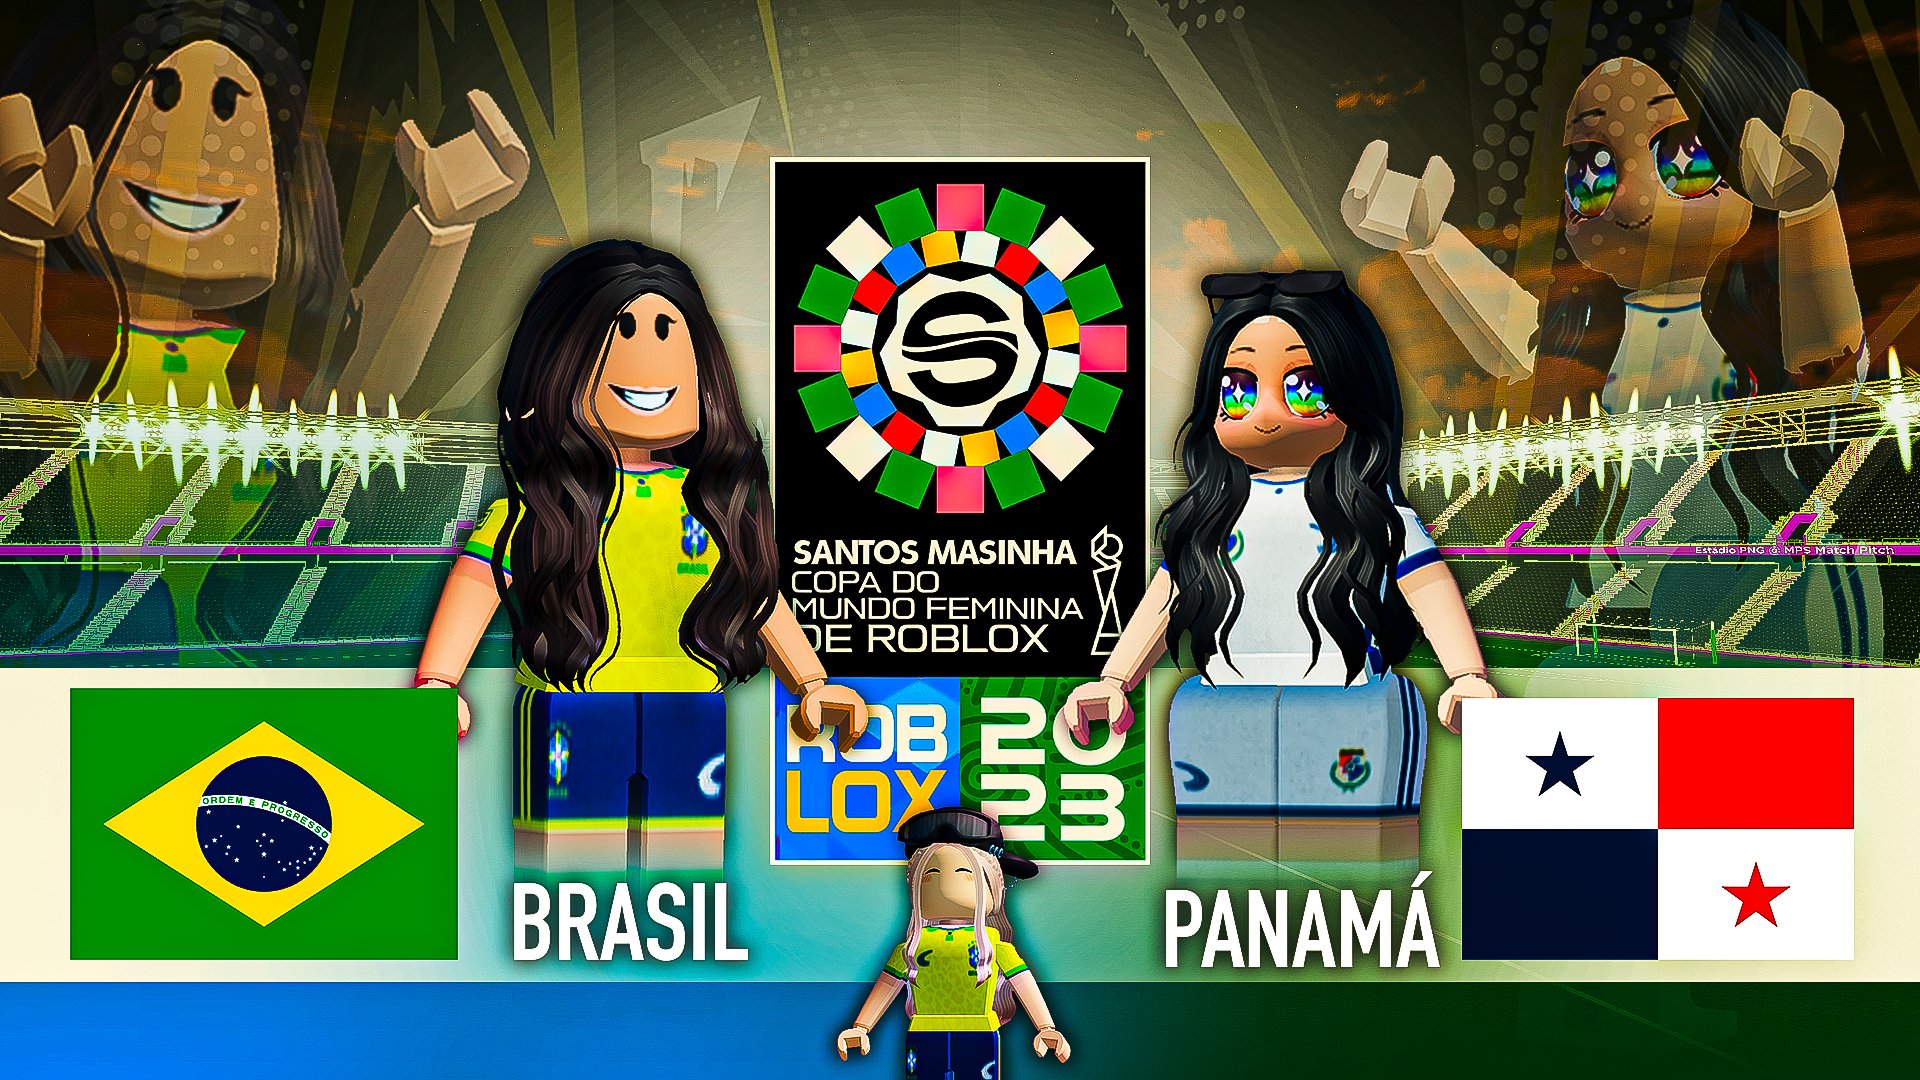 Santos Masinha on X: AMANHÃ TEM LIVE! Brasil x Panamá pela COPA